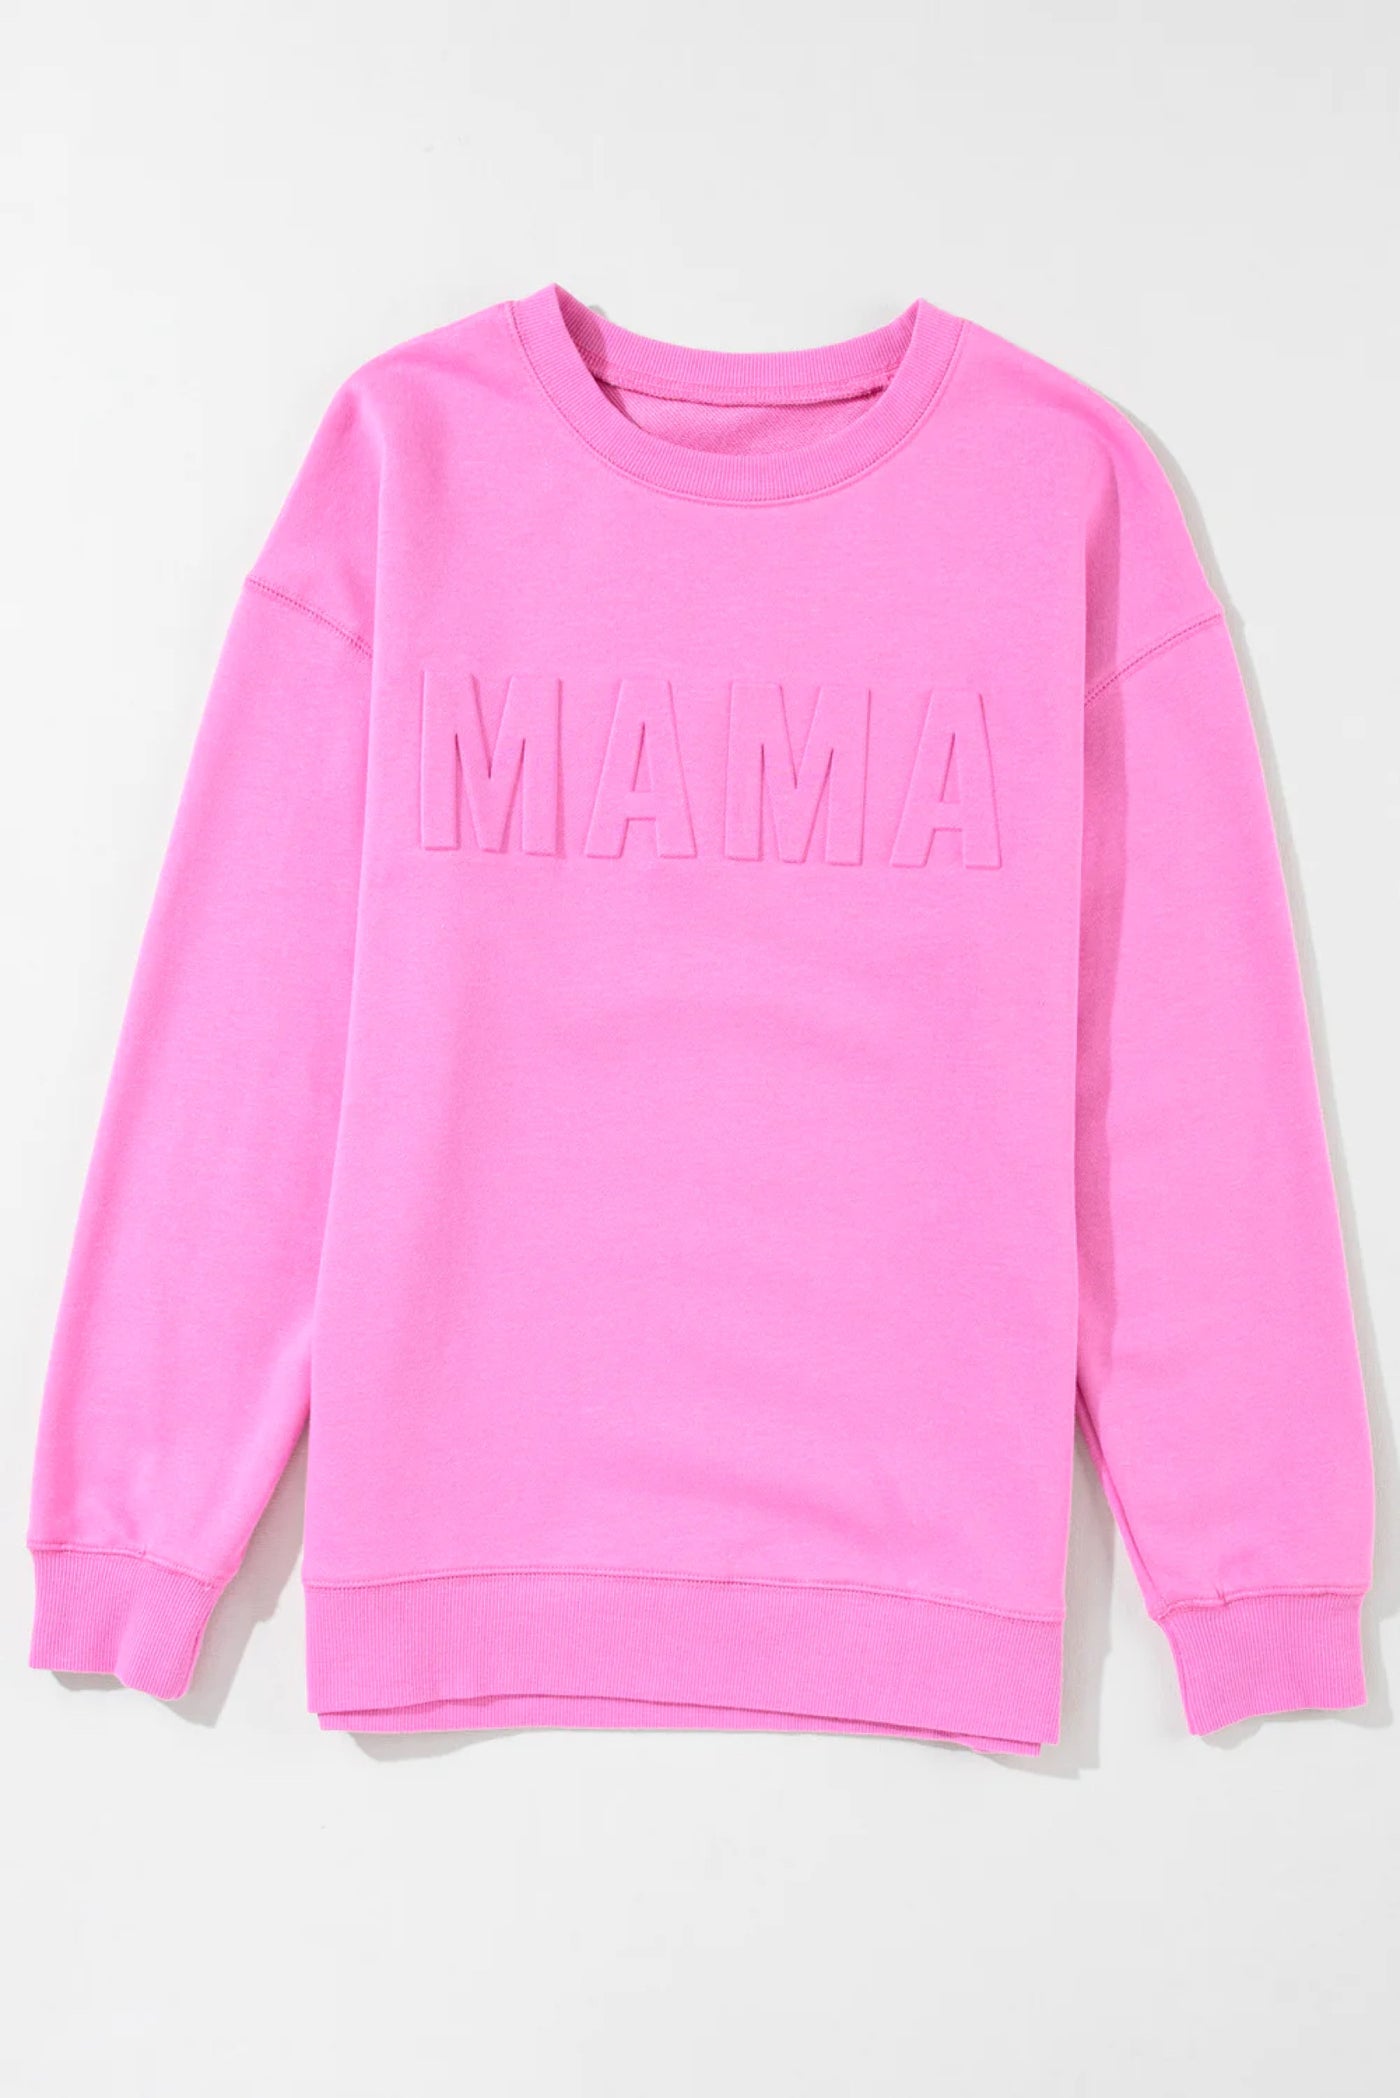 MAMA Perfect Sweatshirt preorder 3/18